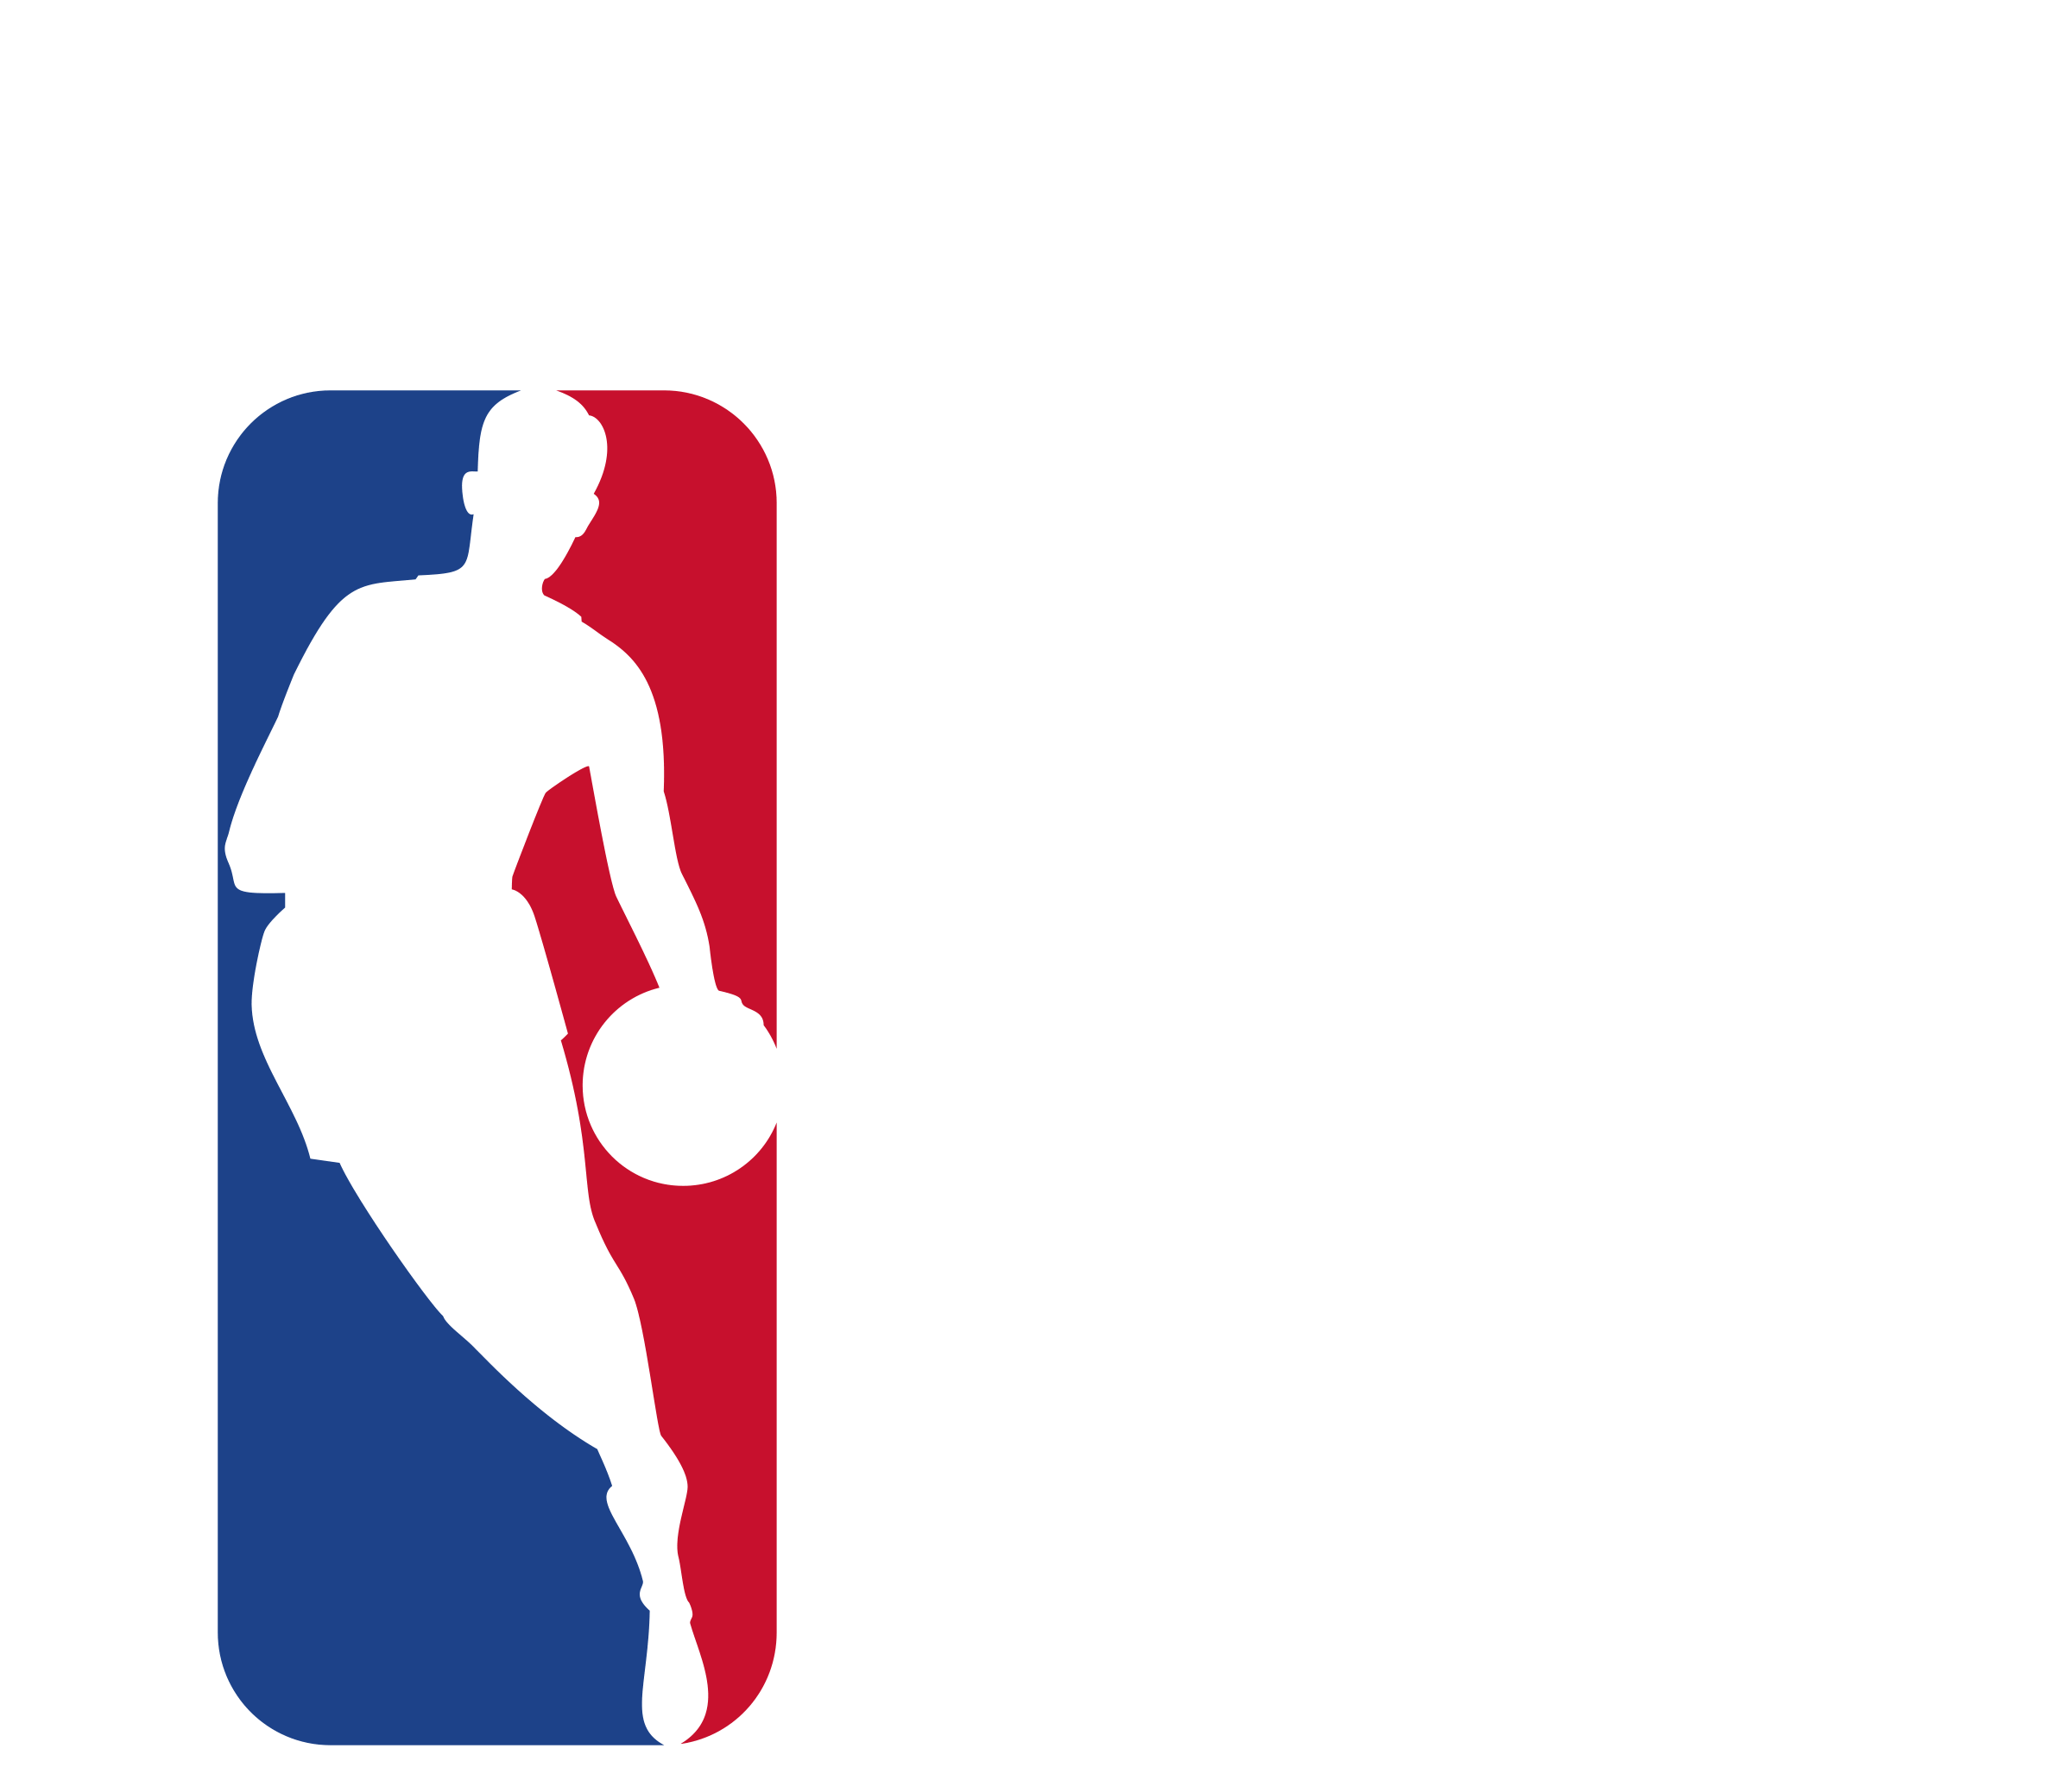 League Pass